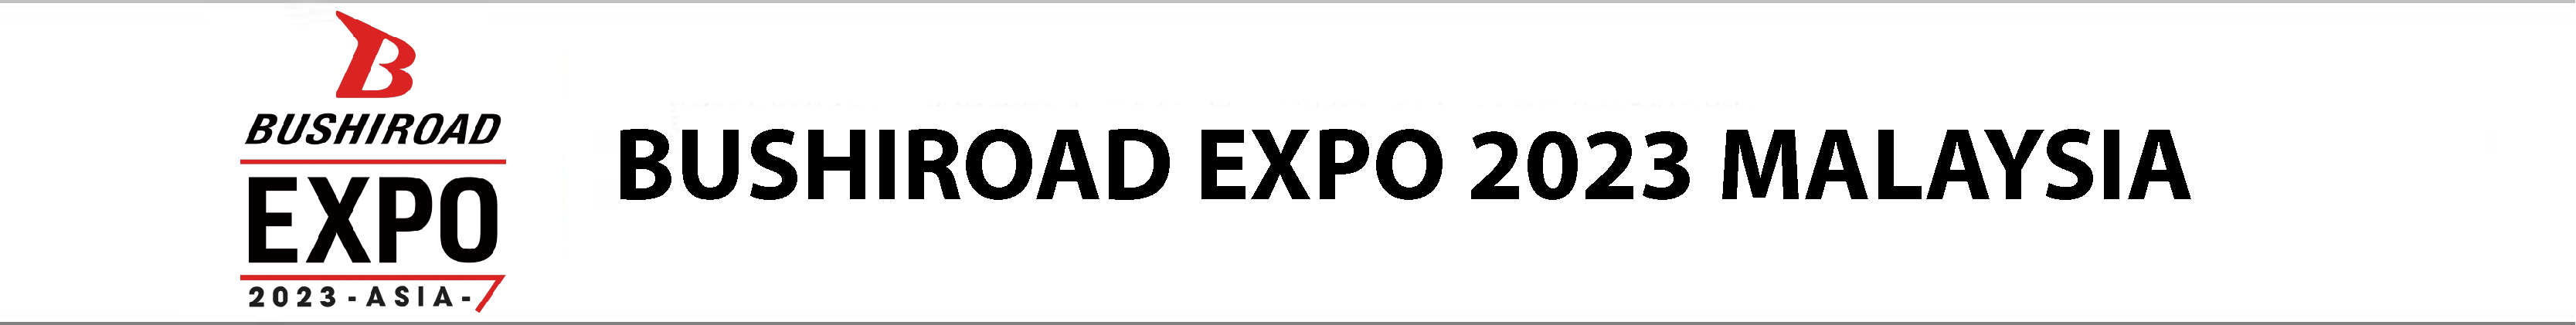 Bushiroad Expo 2023 Malaysia (jom main button)